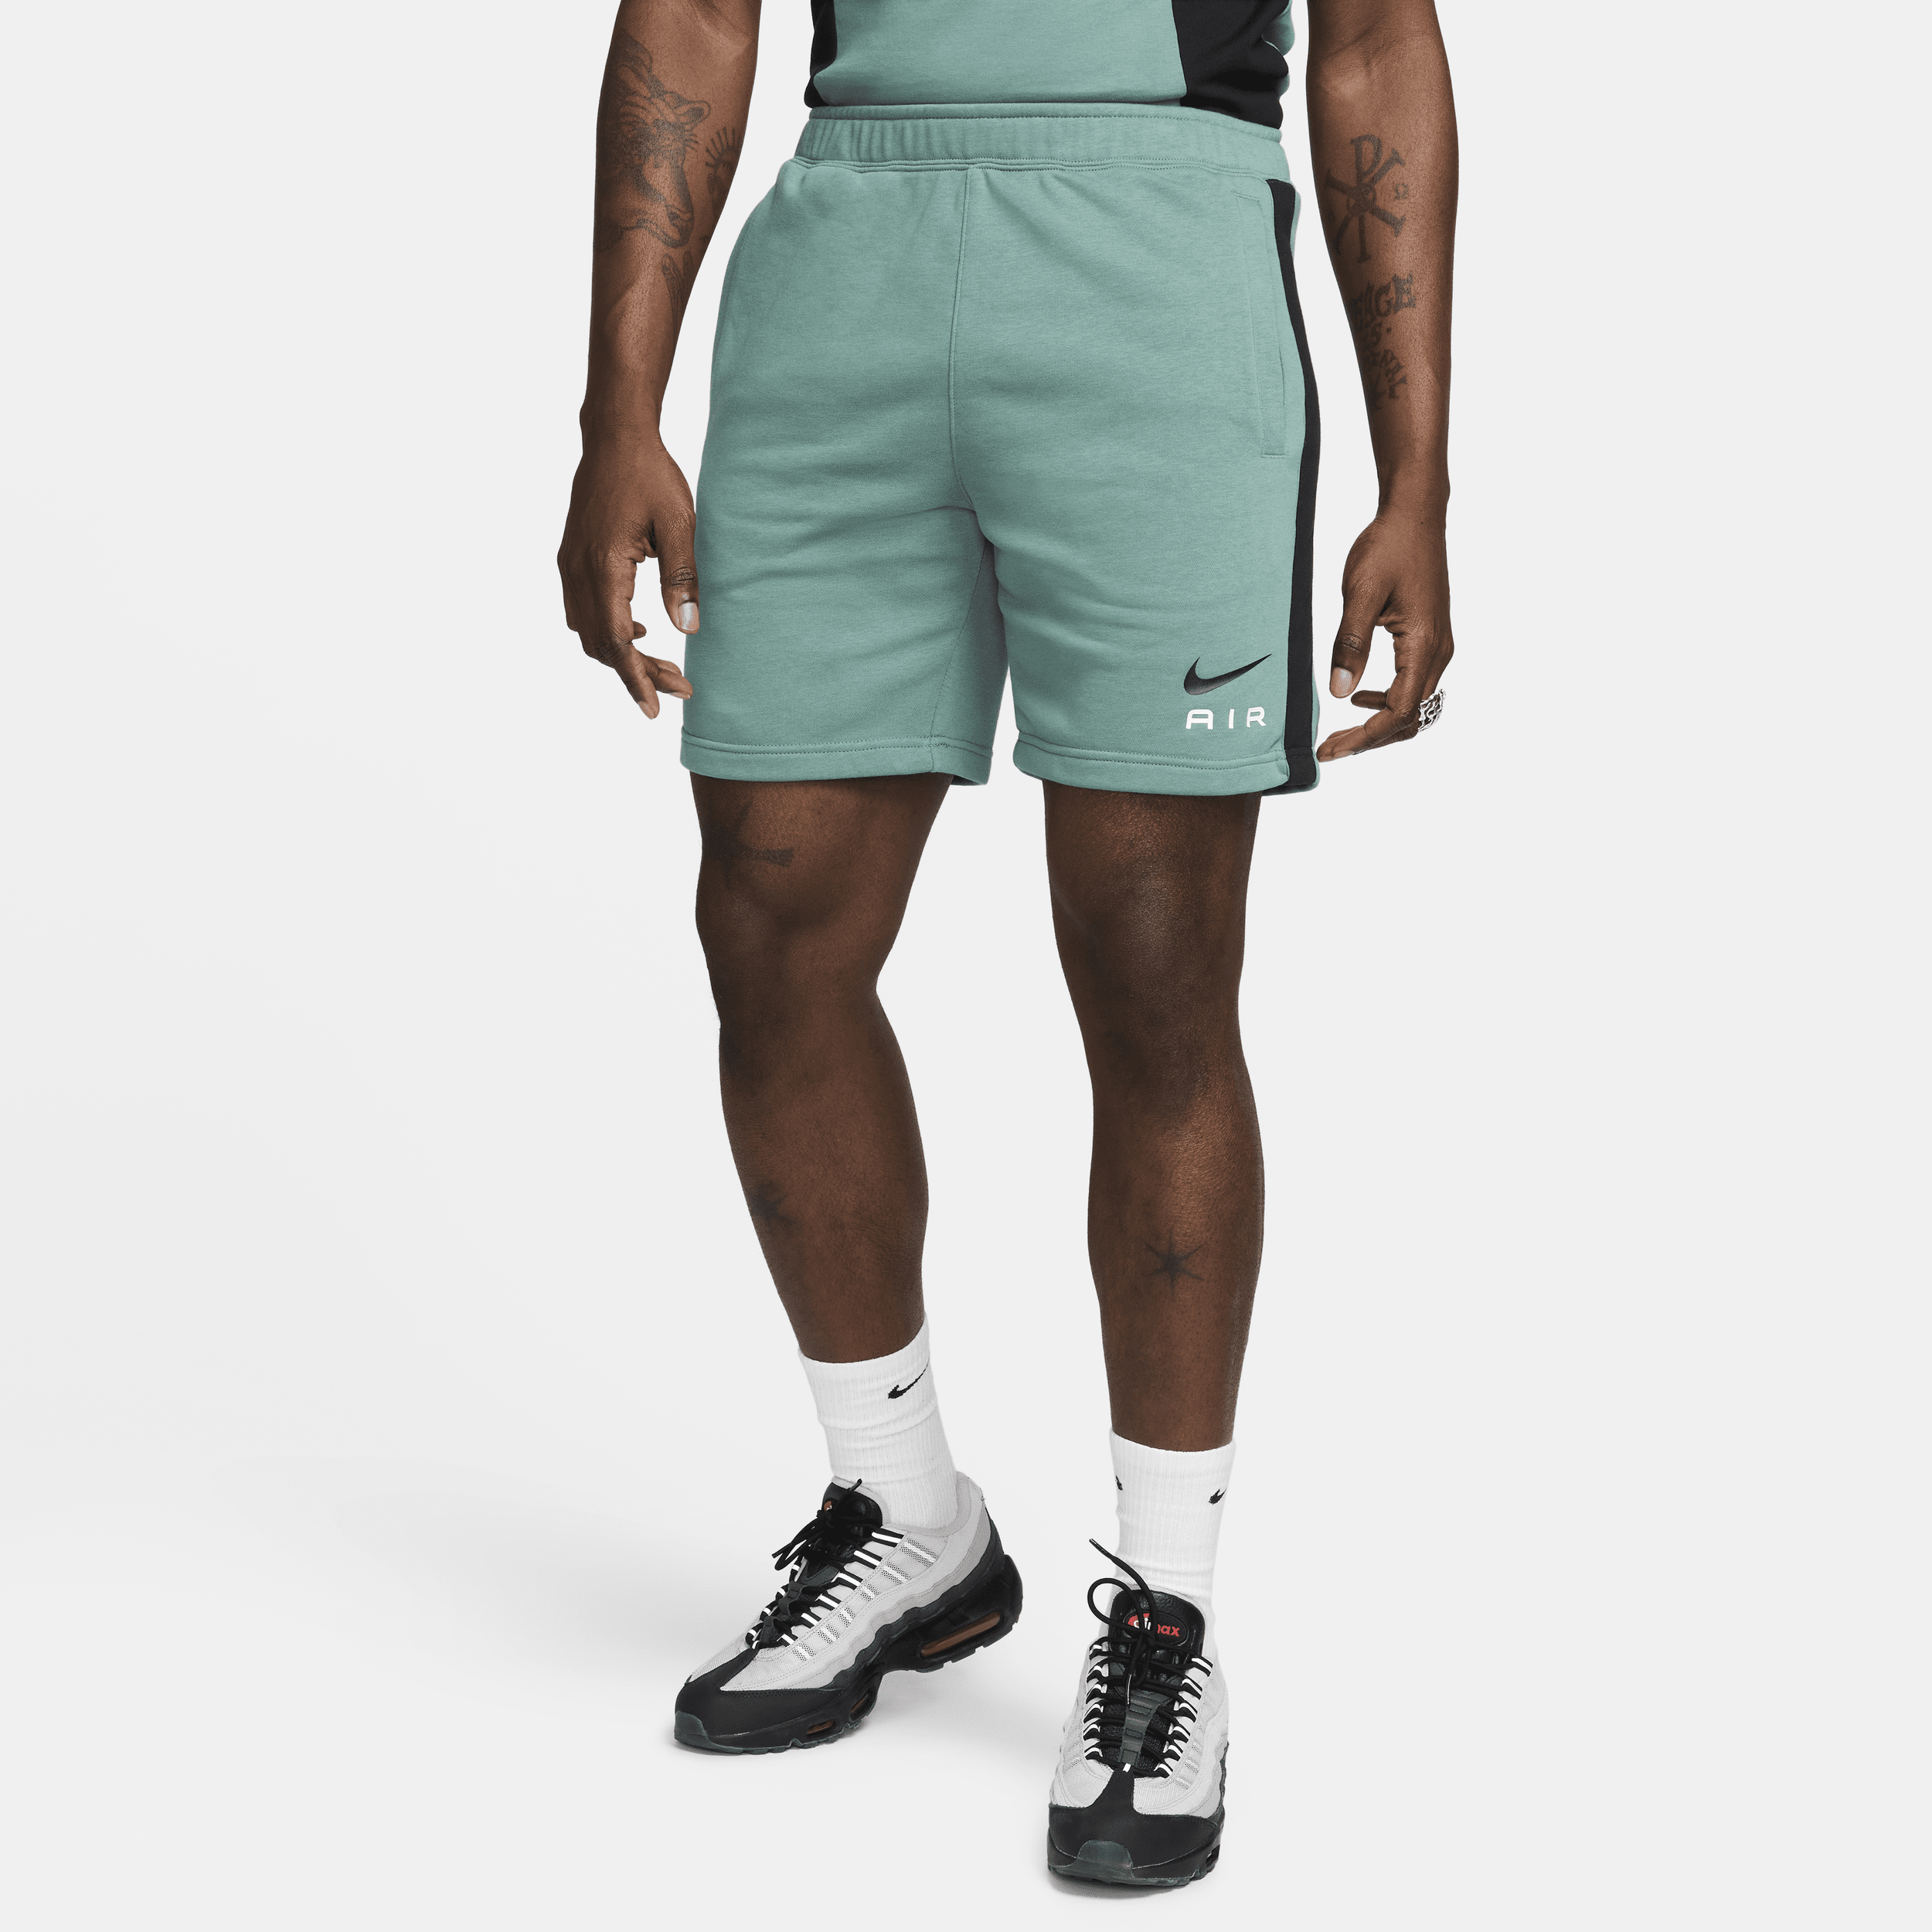 Nike Air-shorts i french terry til mænd - grøn